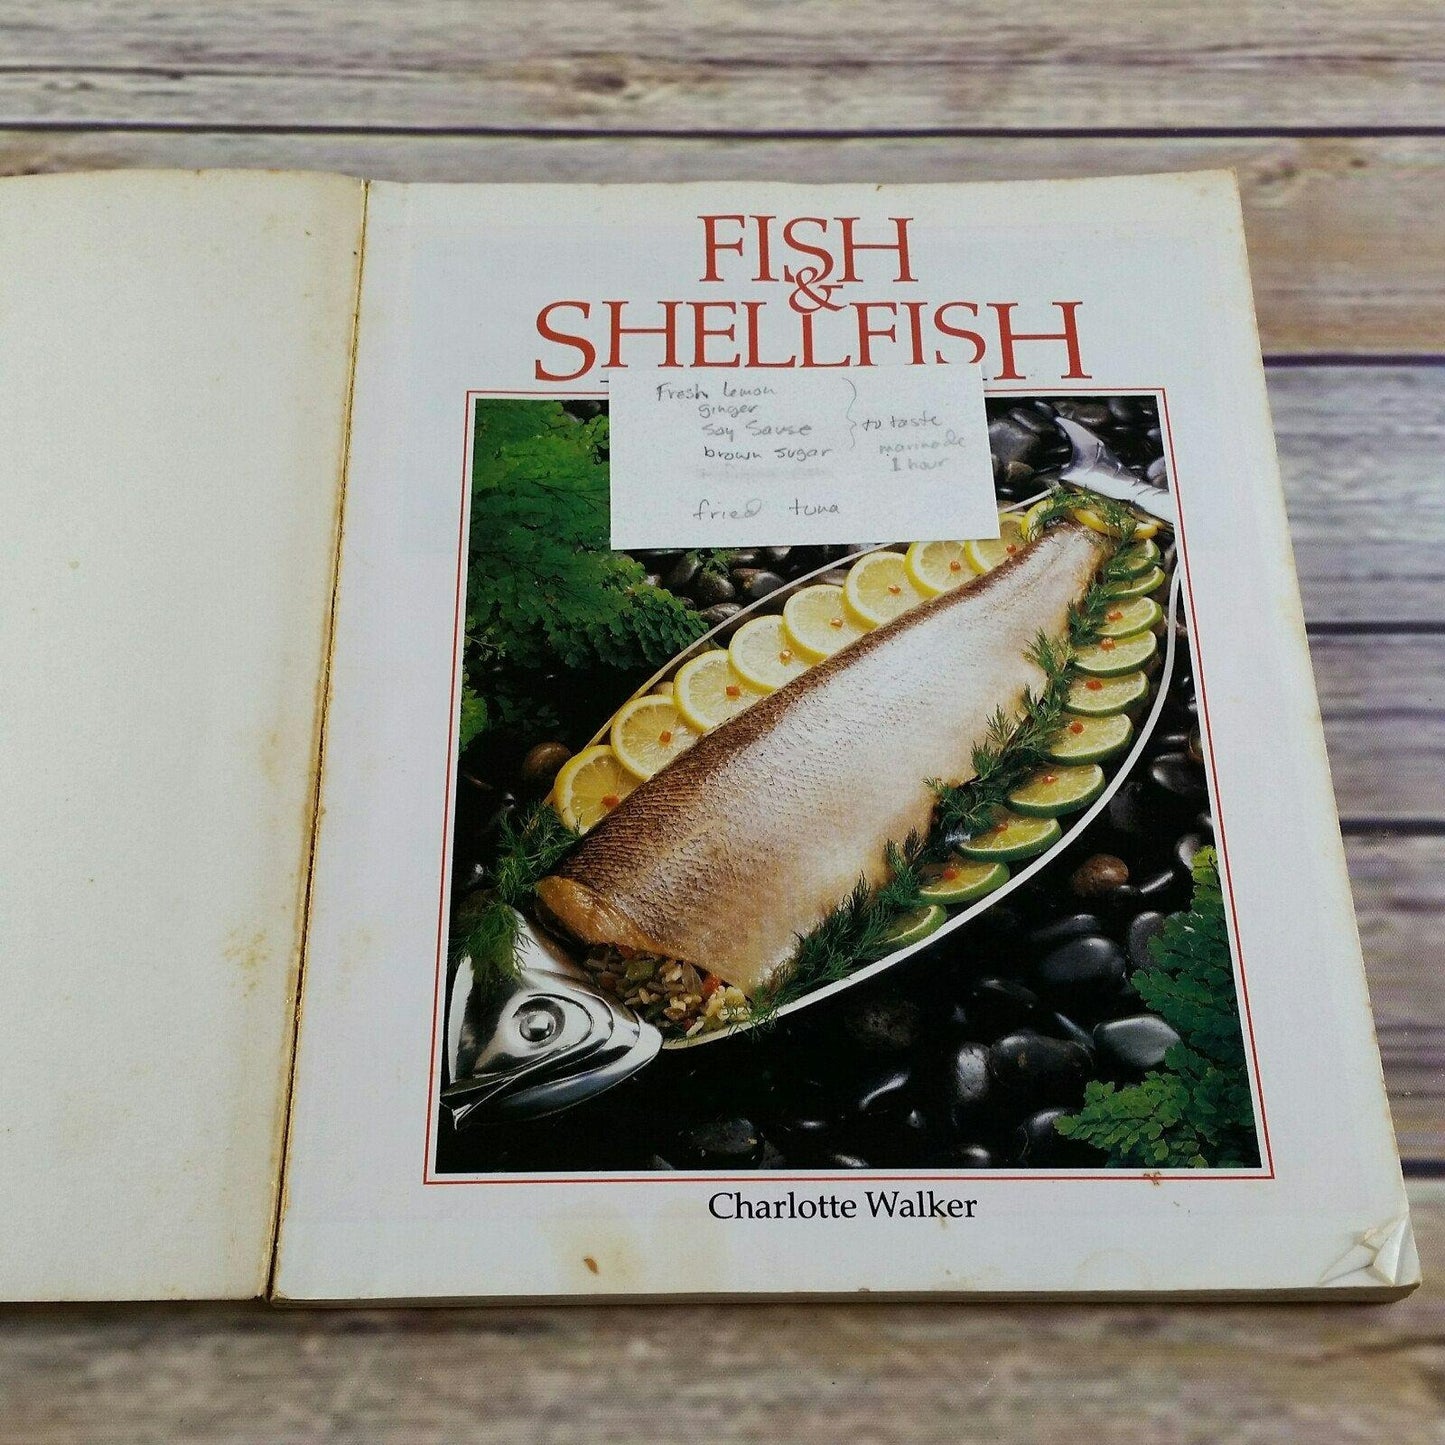 Vintage Seafood Cookbook Fish and Shellfish Seafood Recipes Charlotte Walker HPBooks Paperback 1984